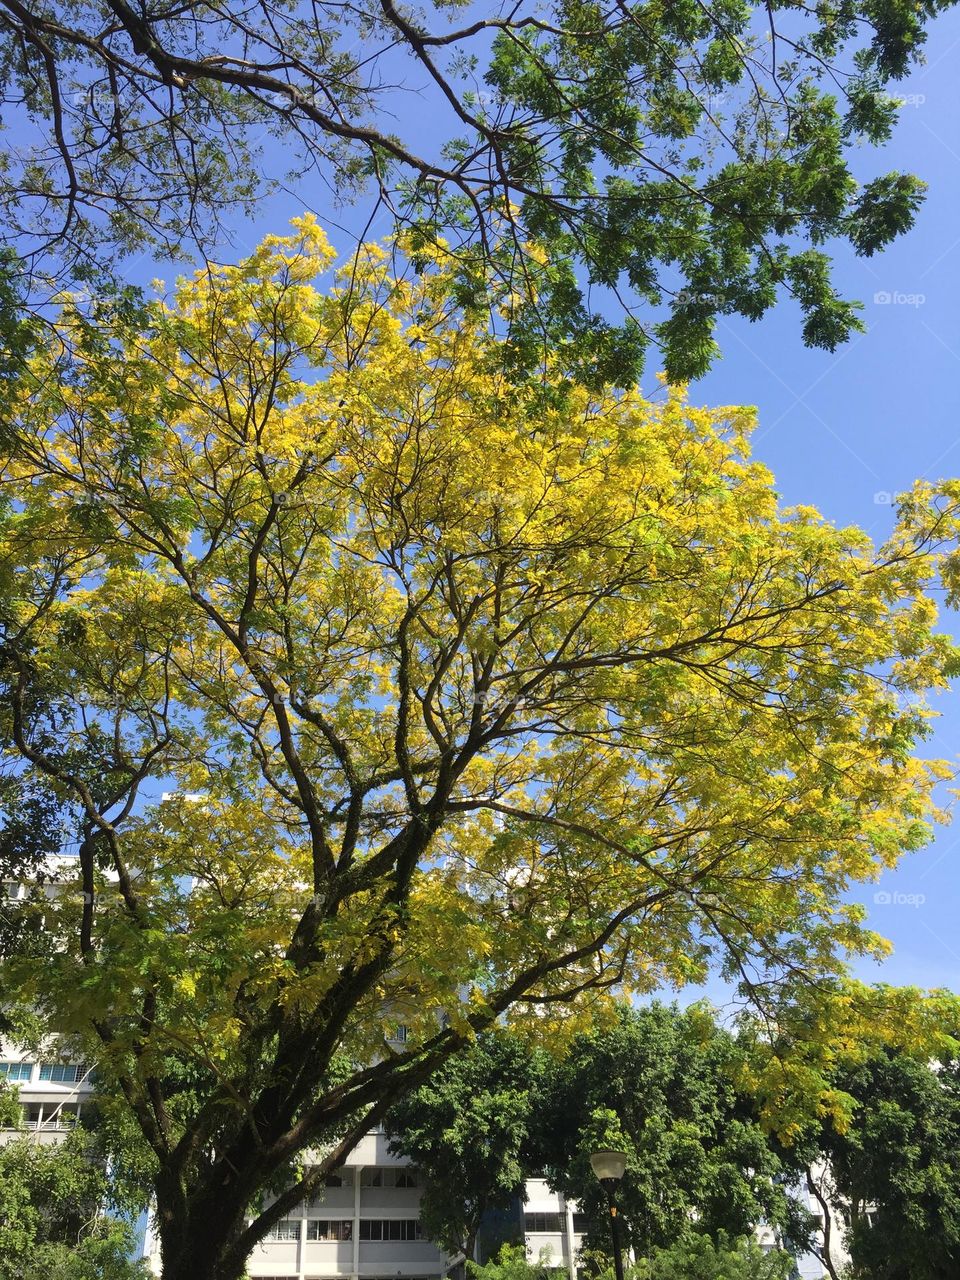 Yellow Flame Tree at Bedok Town Park, Singapore